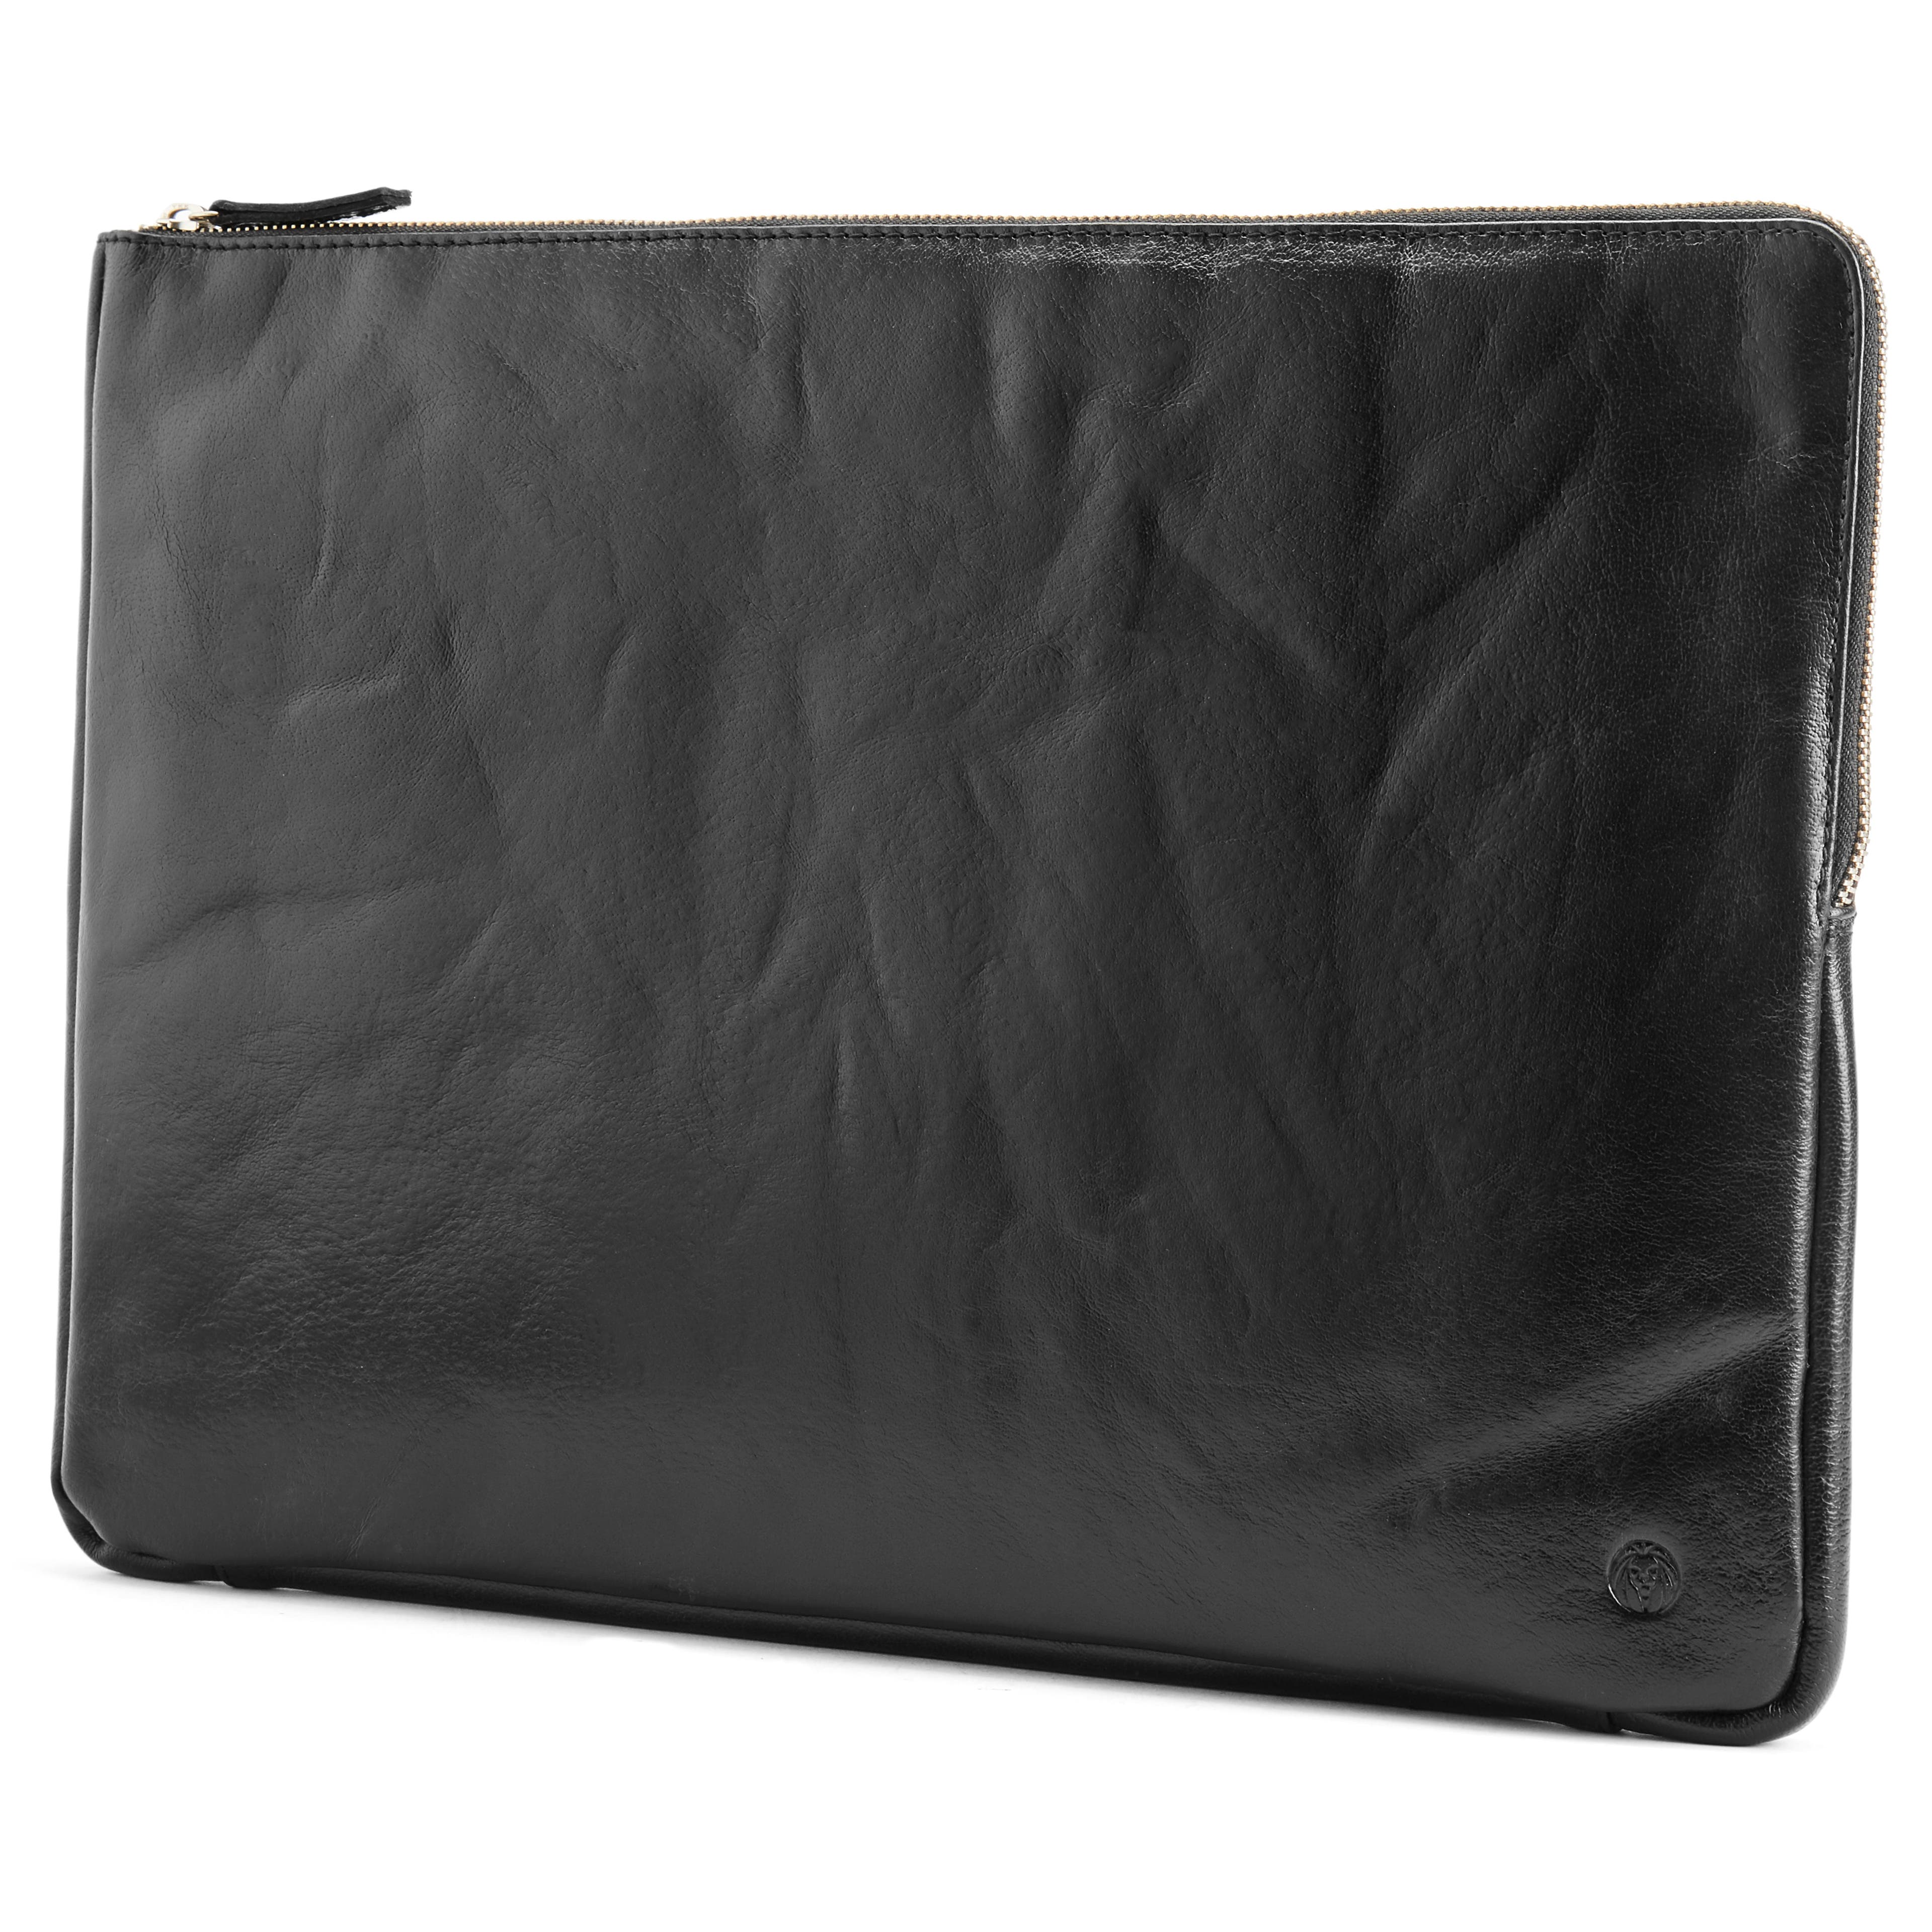 California Black Leather Laptop Sleeve